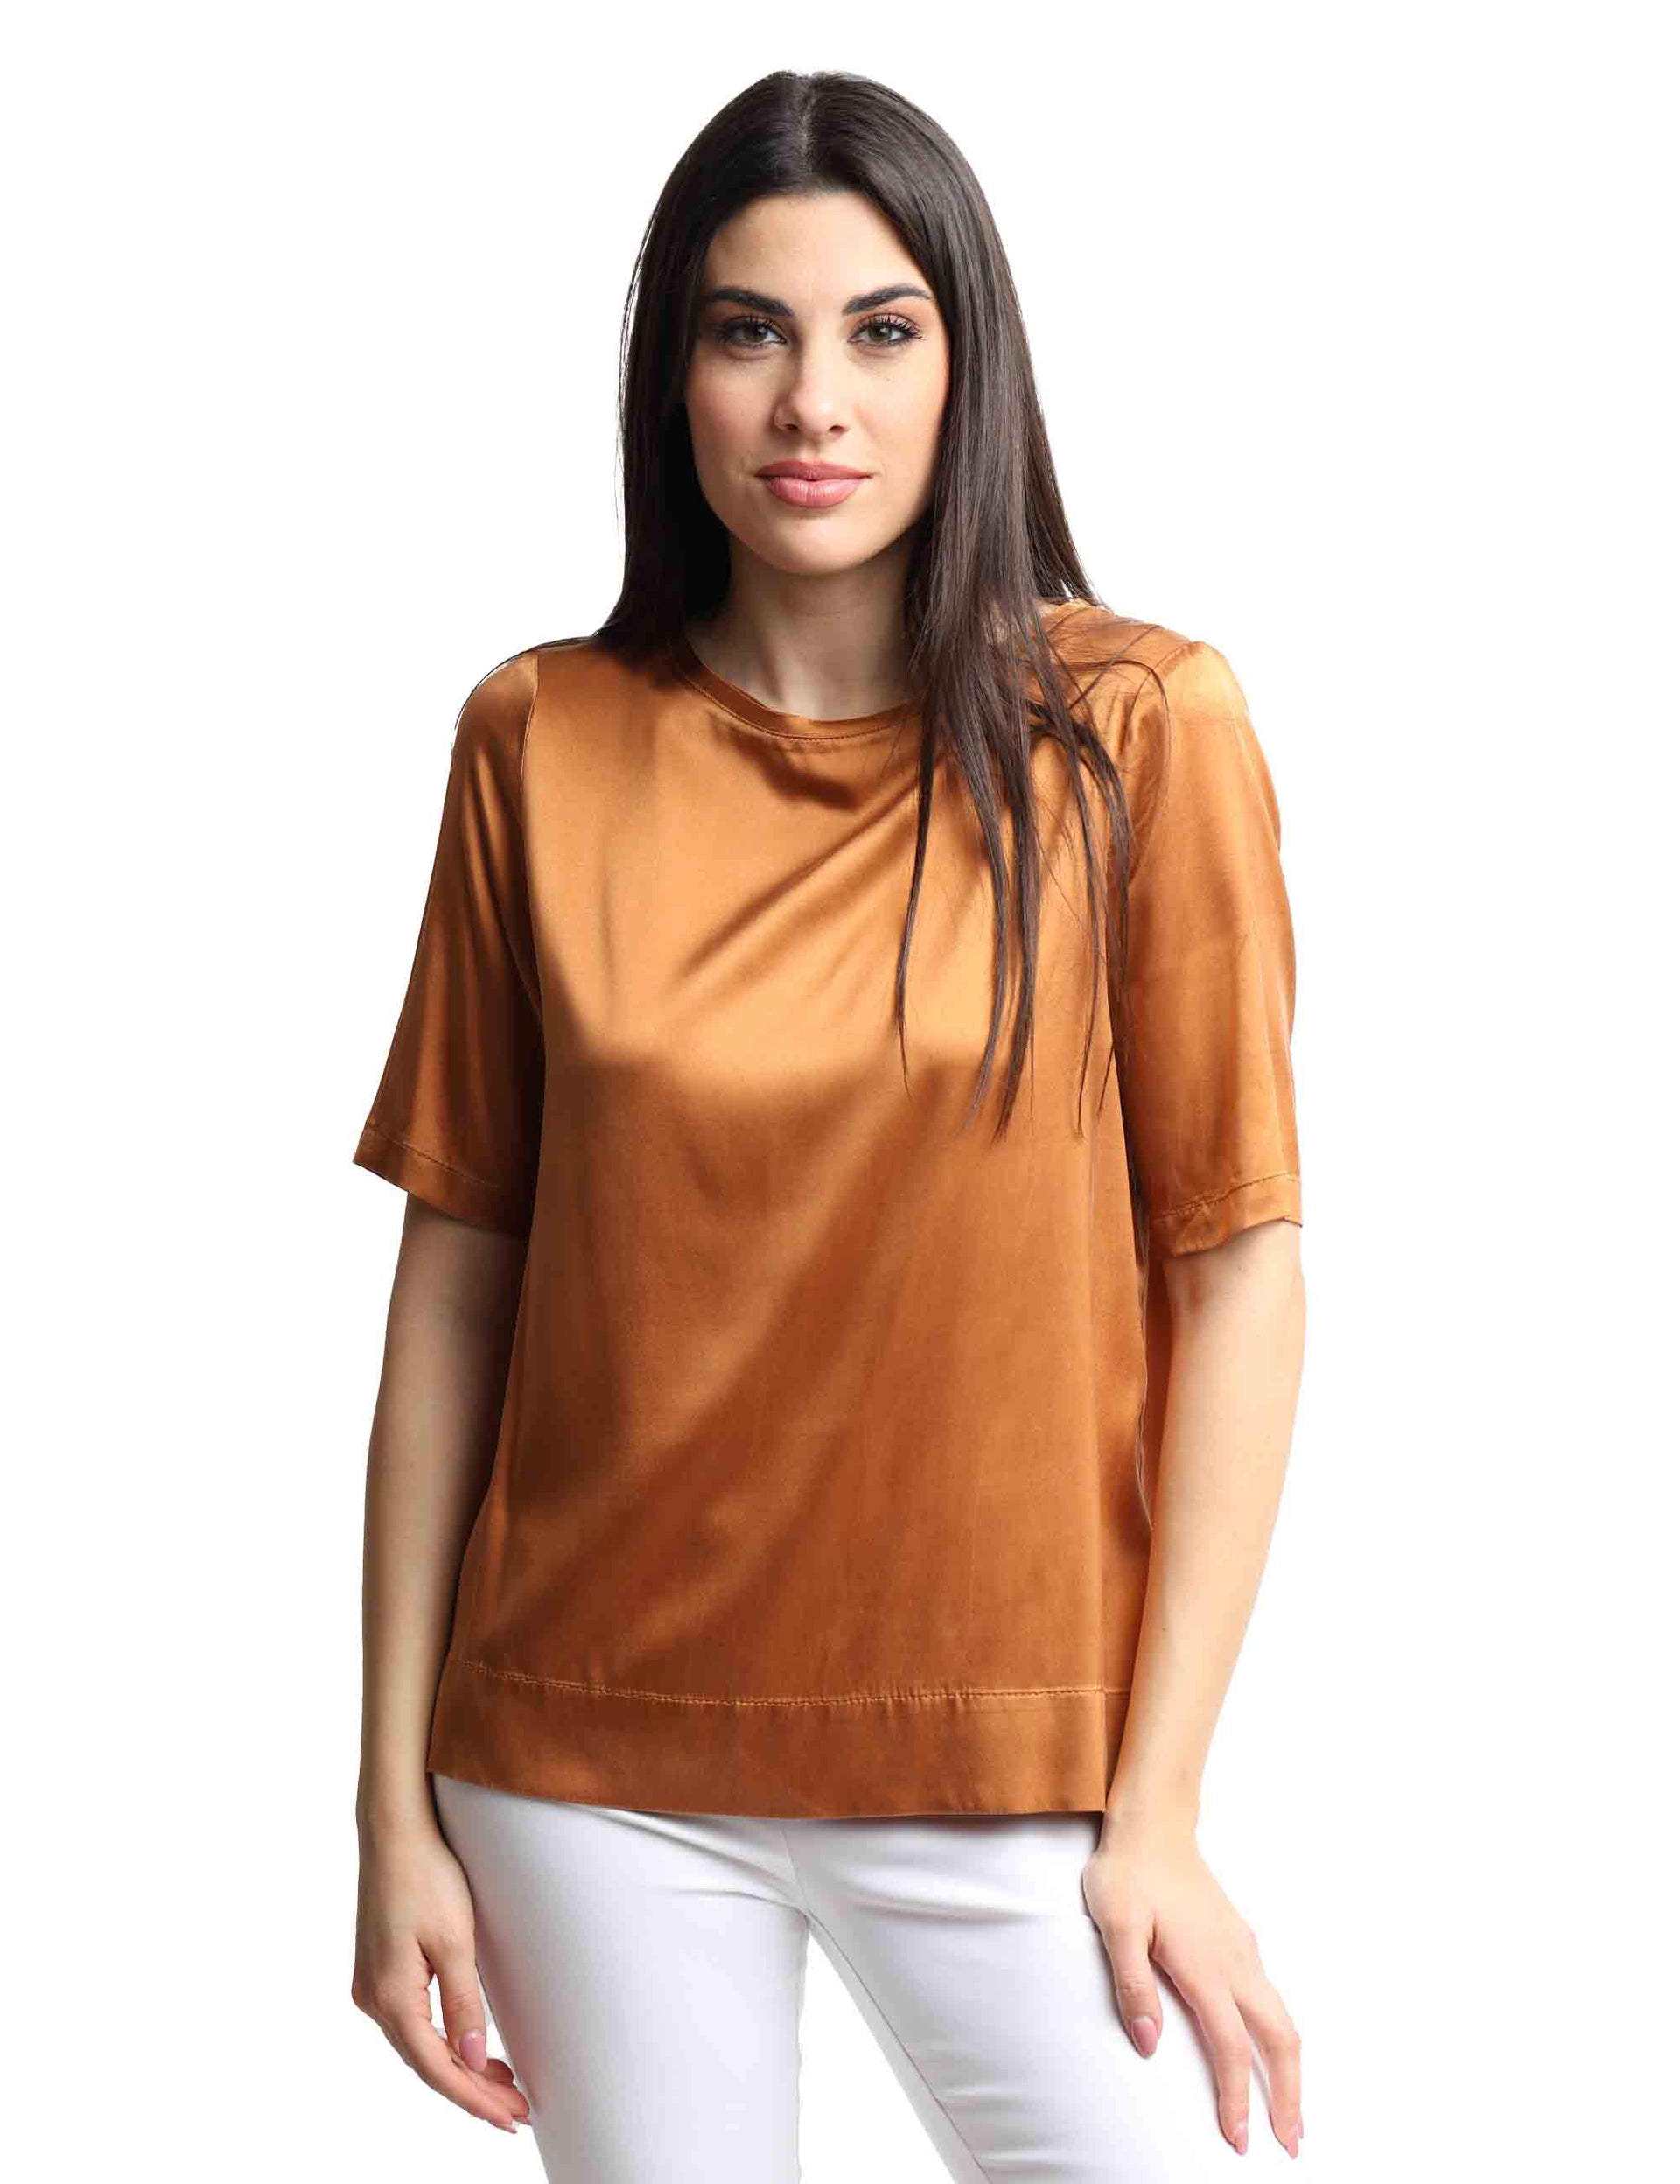 Silk Satin women's t-shirt in peach silk